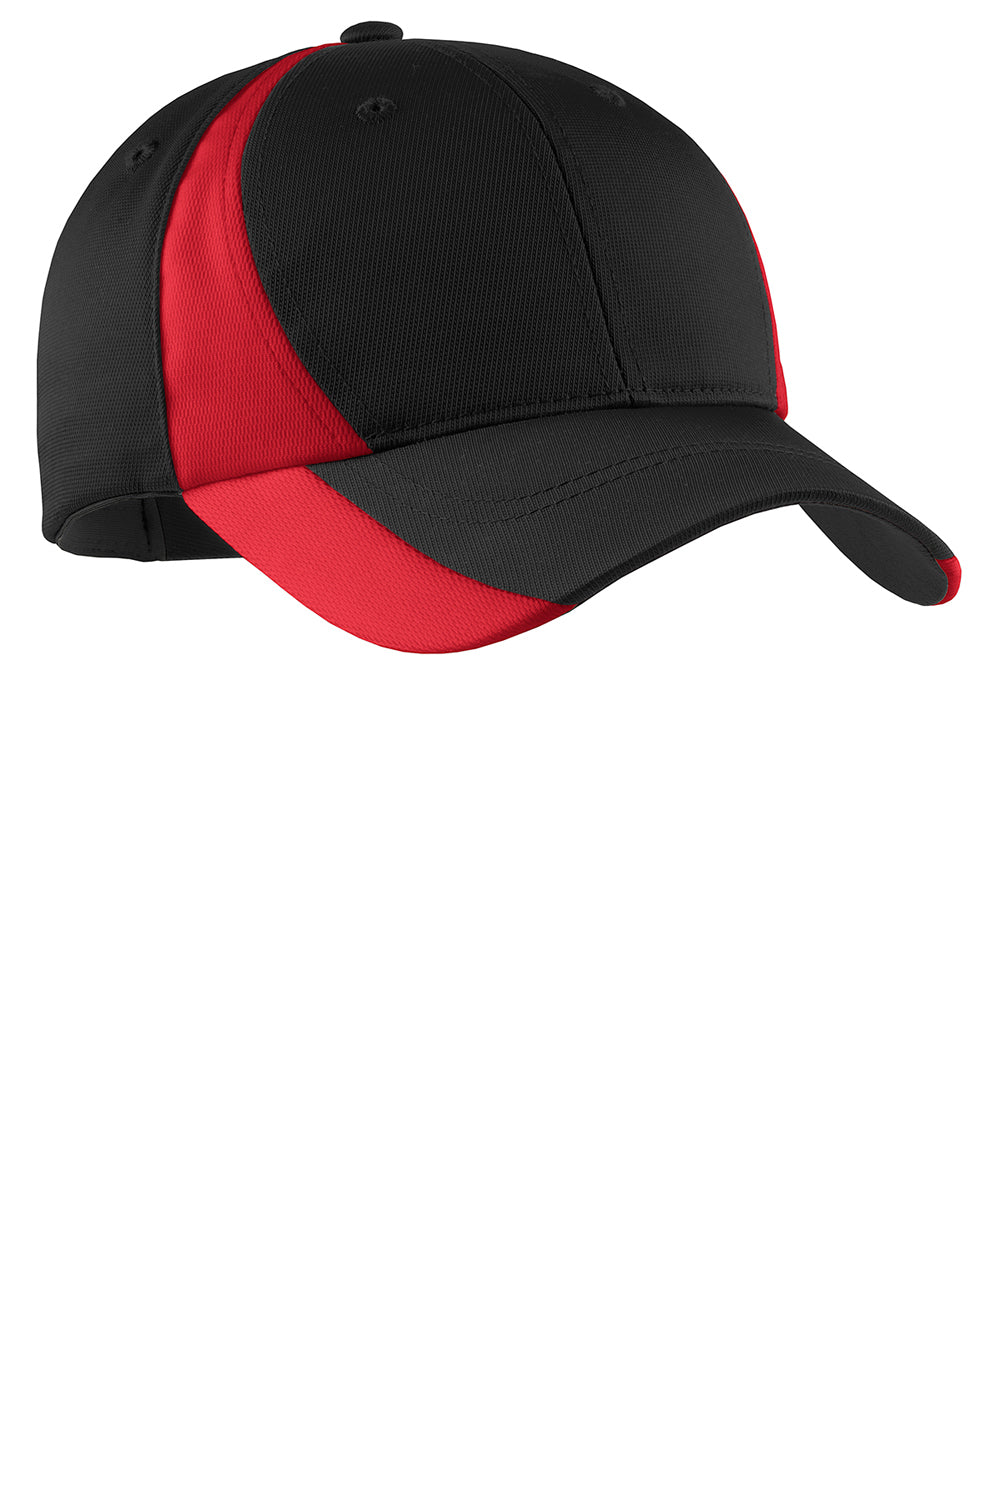 Sport-Tek STC11 Mens Dry Zone Moisture Wicking Adjustable Hat Black/Red Front